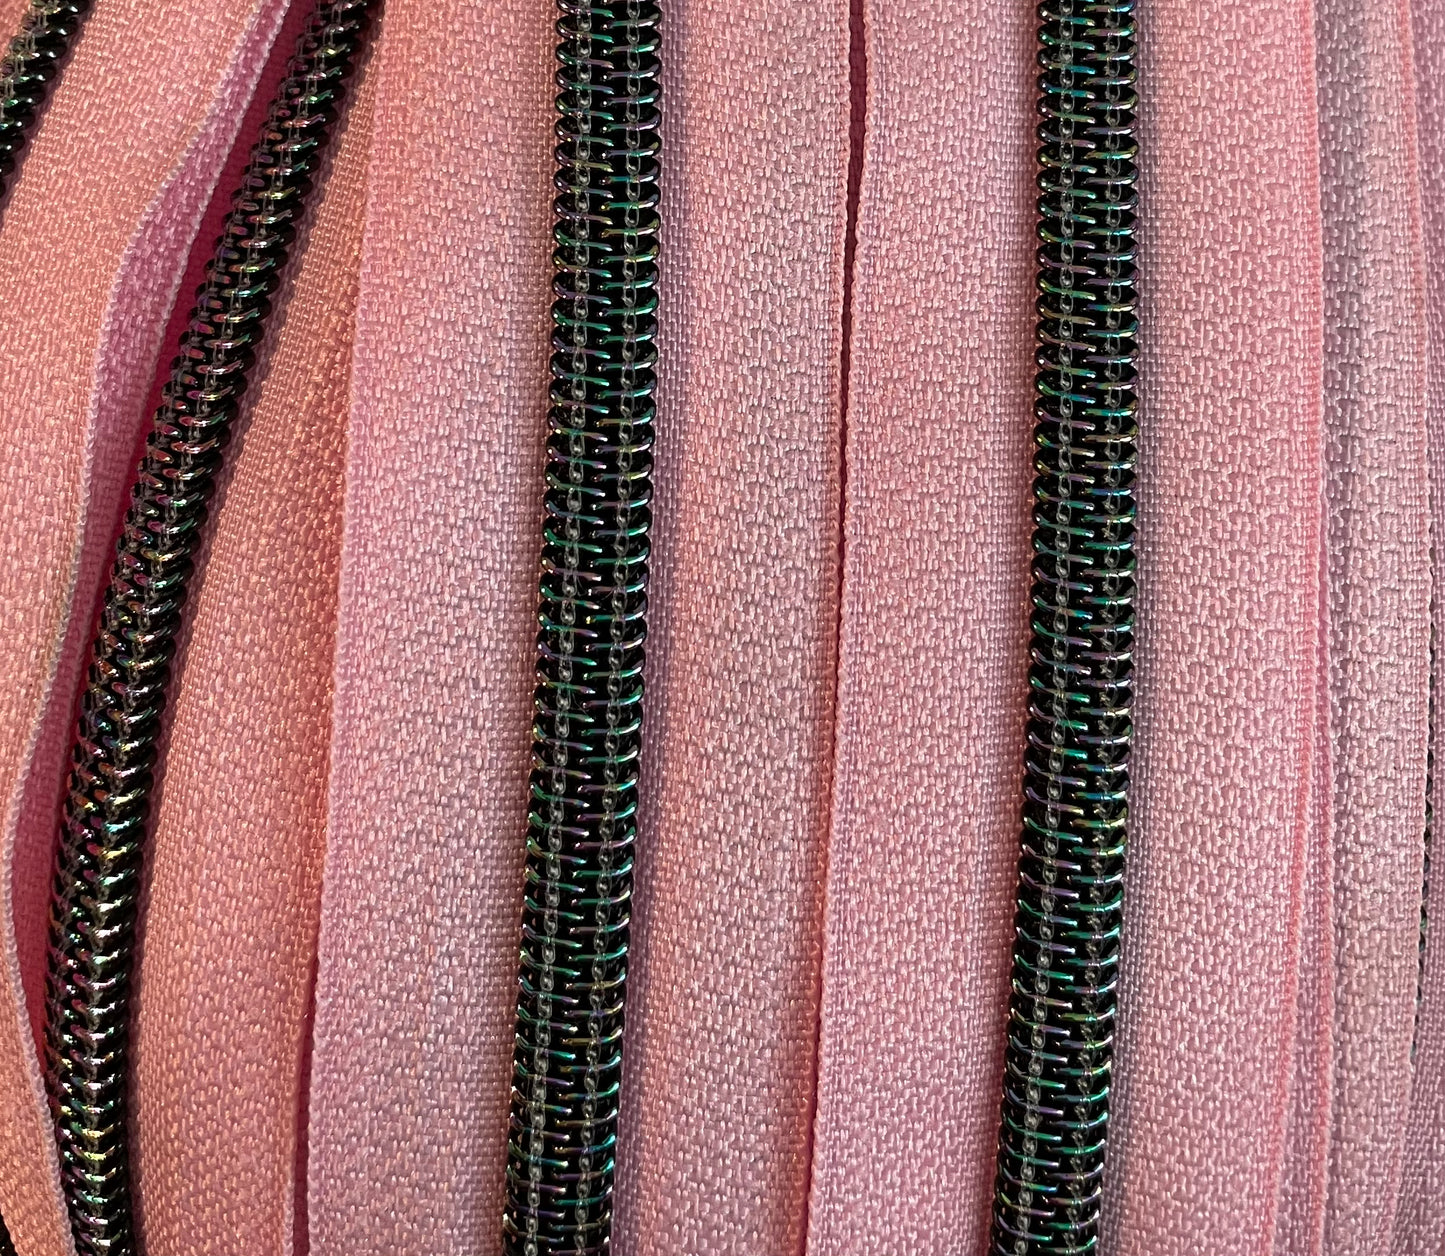 Pink zipper tape with black iridescent teeth